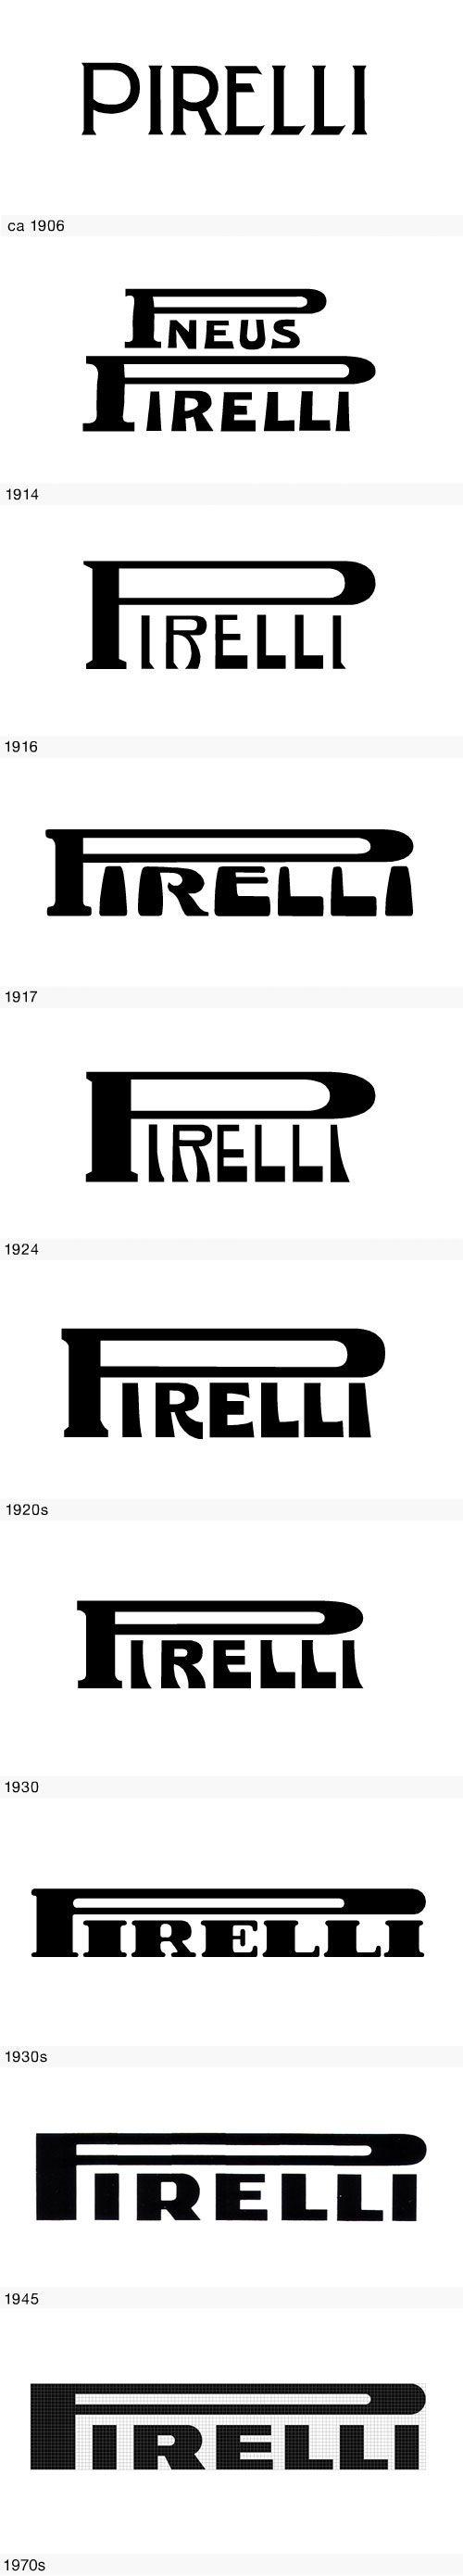 Pirelli Logo - Pirelli logo evolution | Logo Design Love